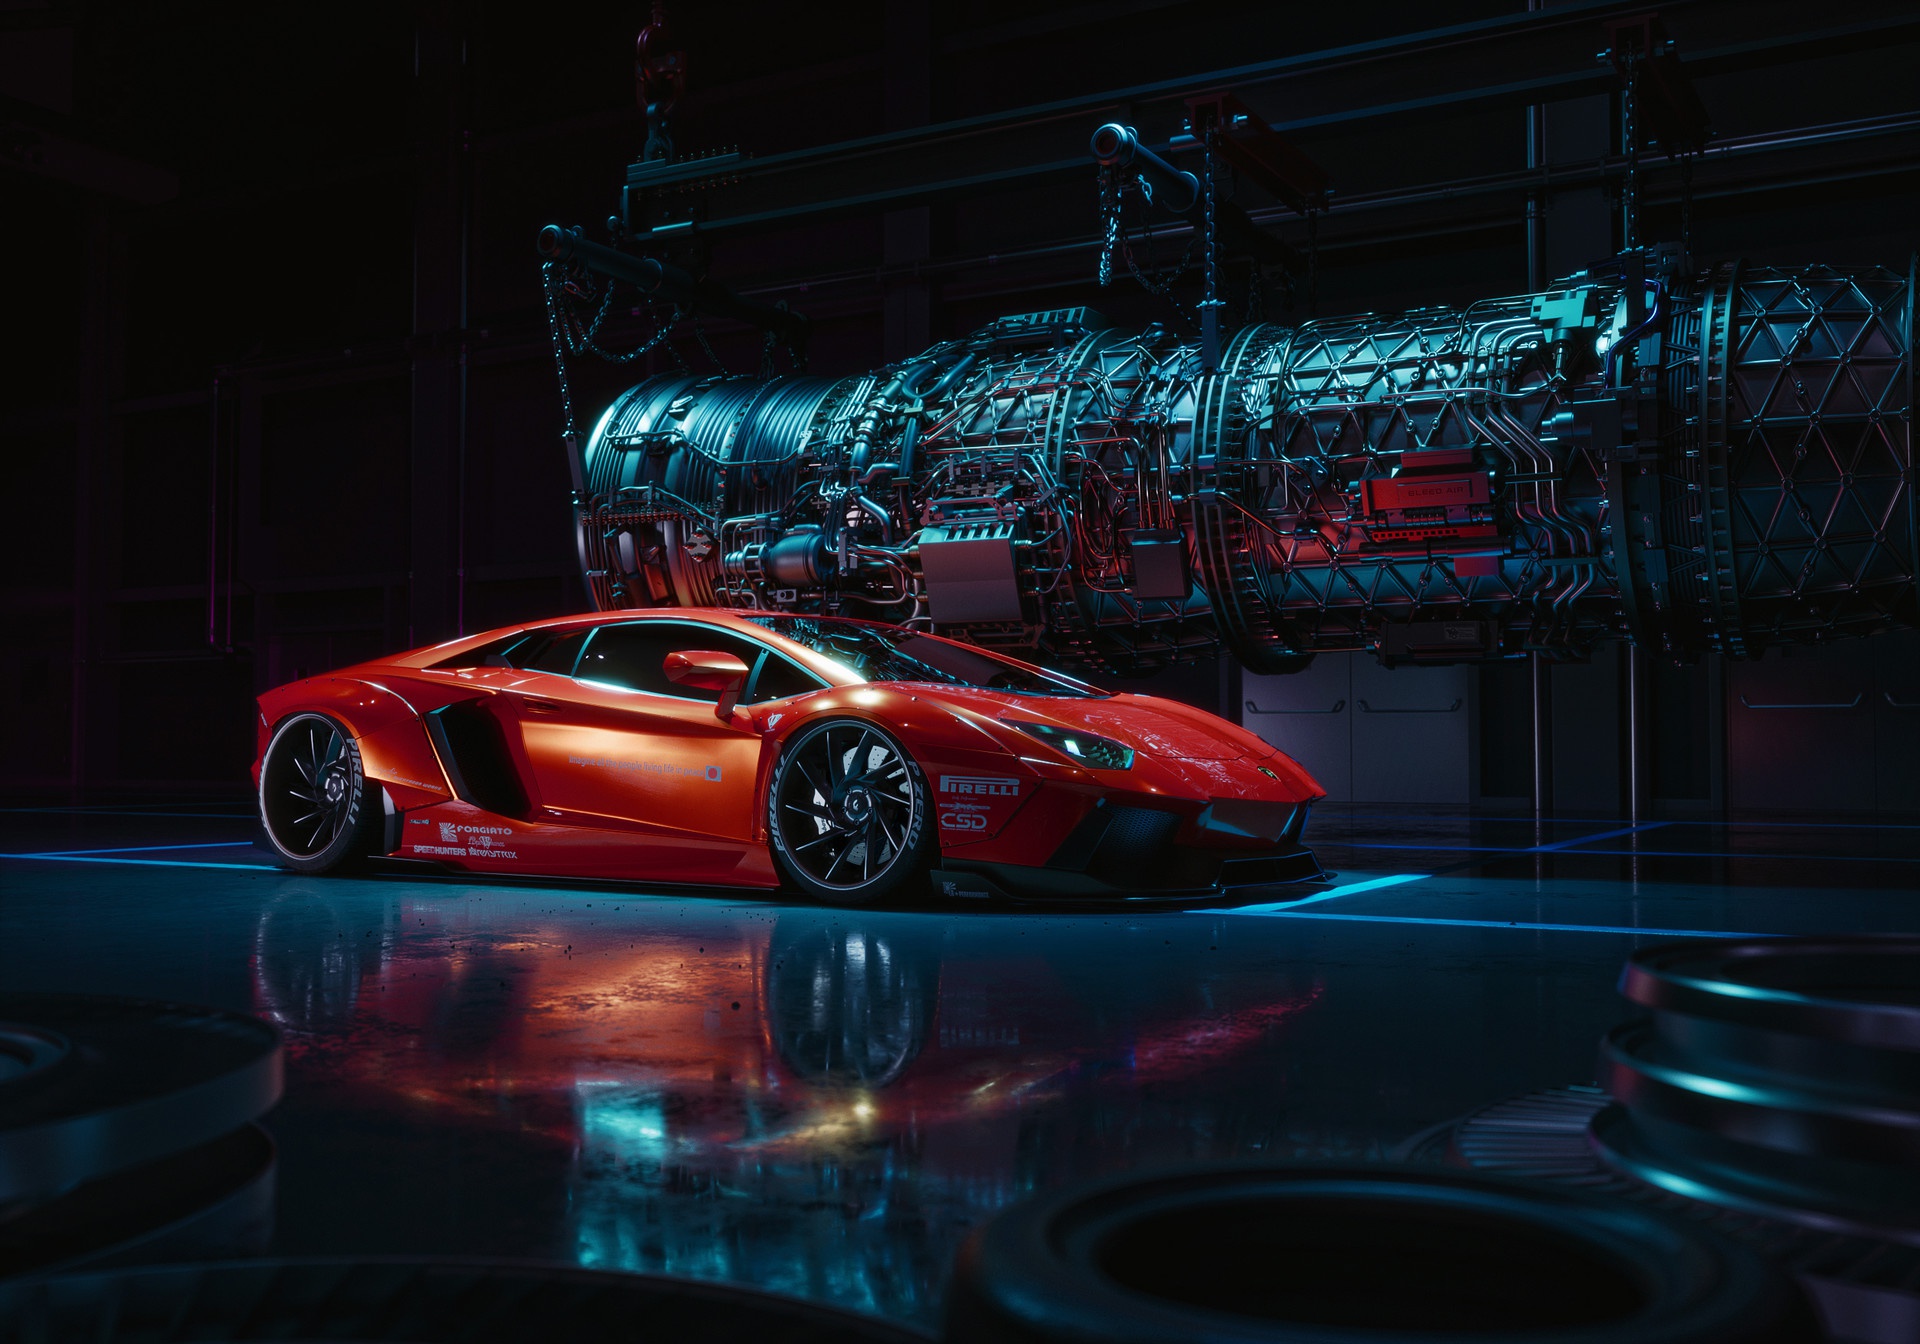 150+ Lamborghini Aventador LP 700-4 HD Wallpapers and Backgrounds